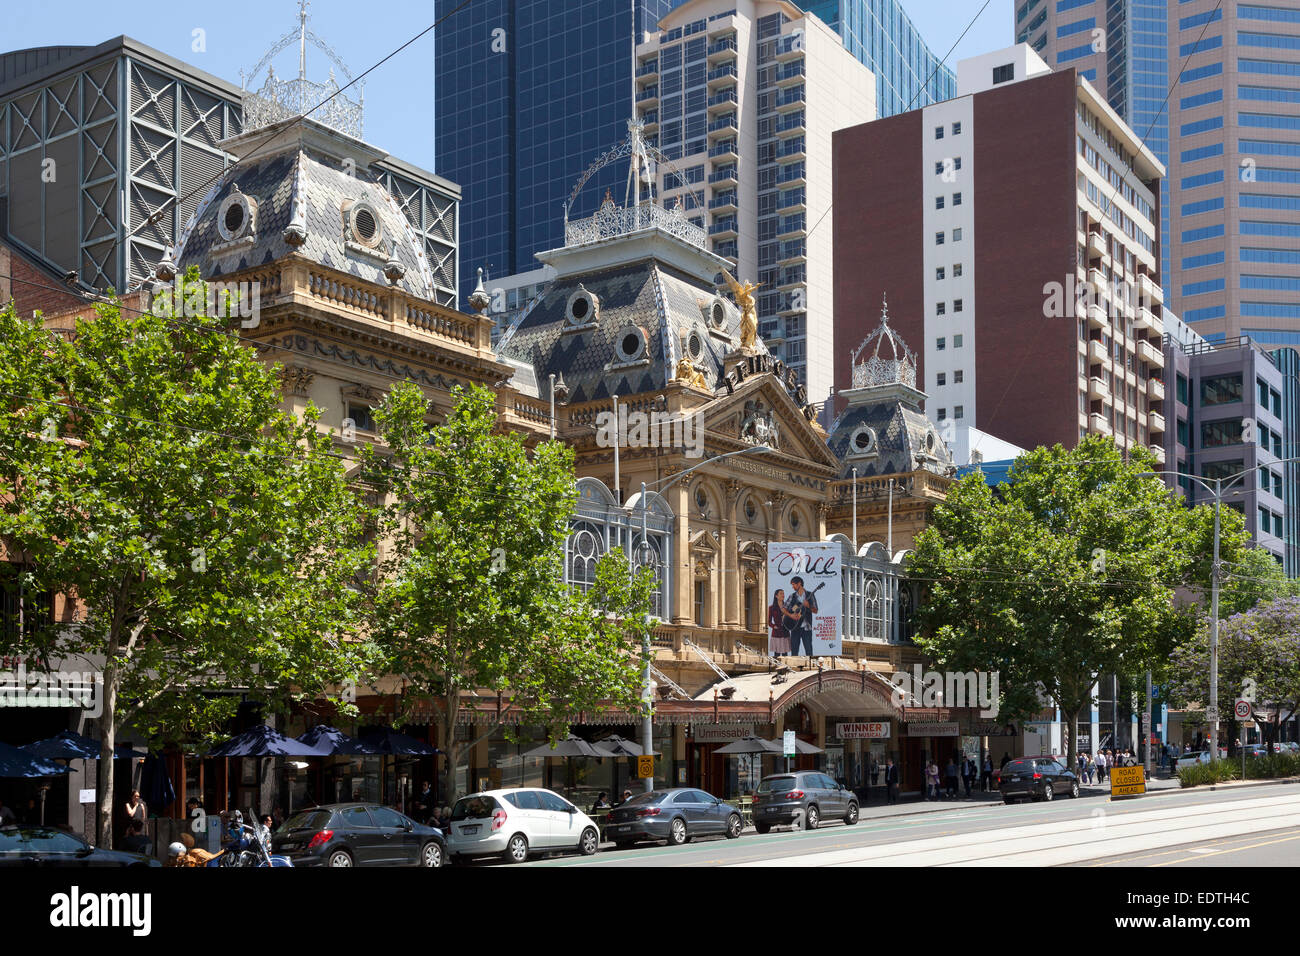 Princess theatre in Springstreet, Melbourne, Australia Stock Photo